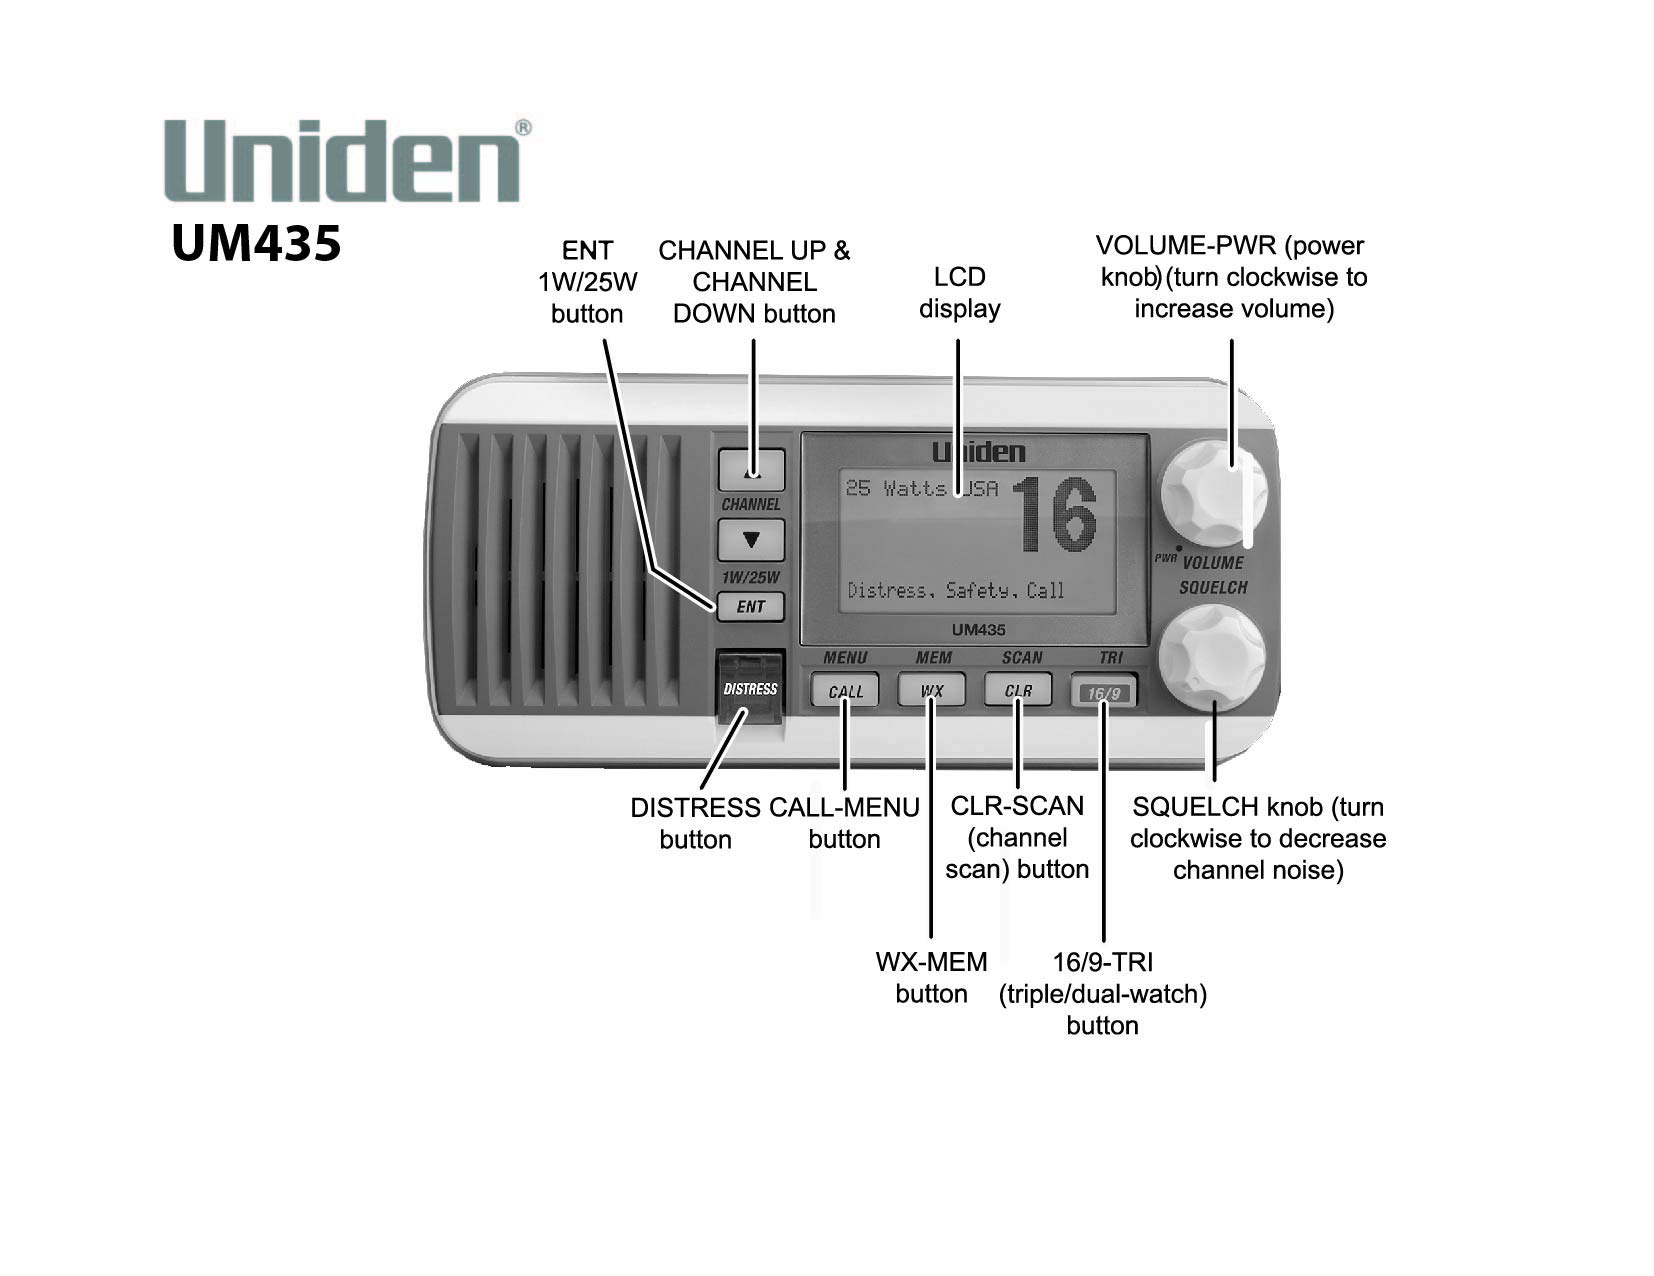 Uniden UM435BK Advanced Fixed Mount VHF Marine Radio, All USA/International/Canadian Marine Channels including new 4-Digit, CDN “B” Channels, 1 Watt/25 Watt Power, Waterproof IPX8 Submersible, Black